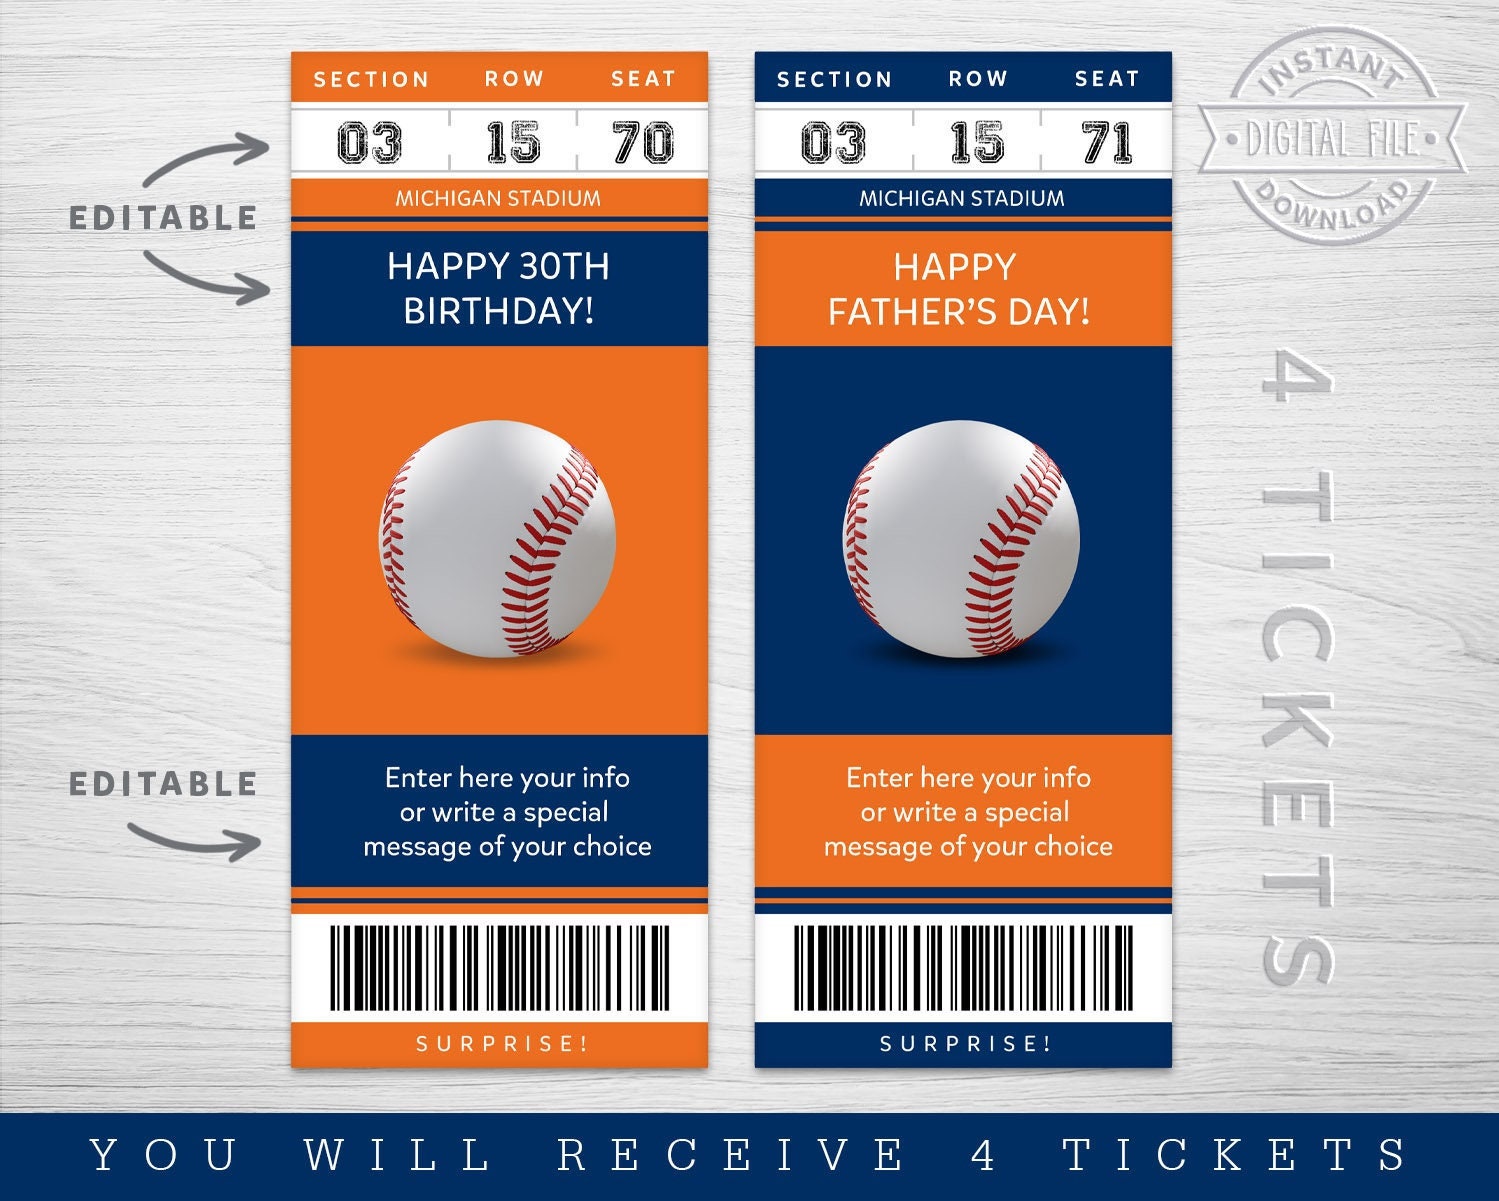 Boston Red Sox Game Ticket Gift Voucher